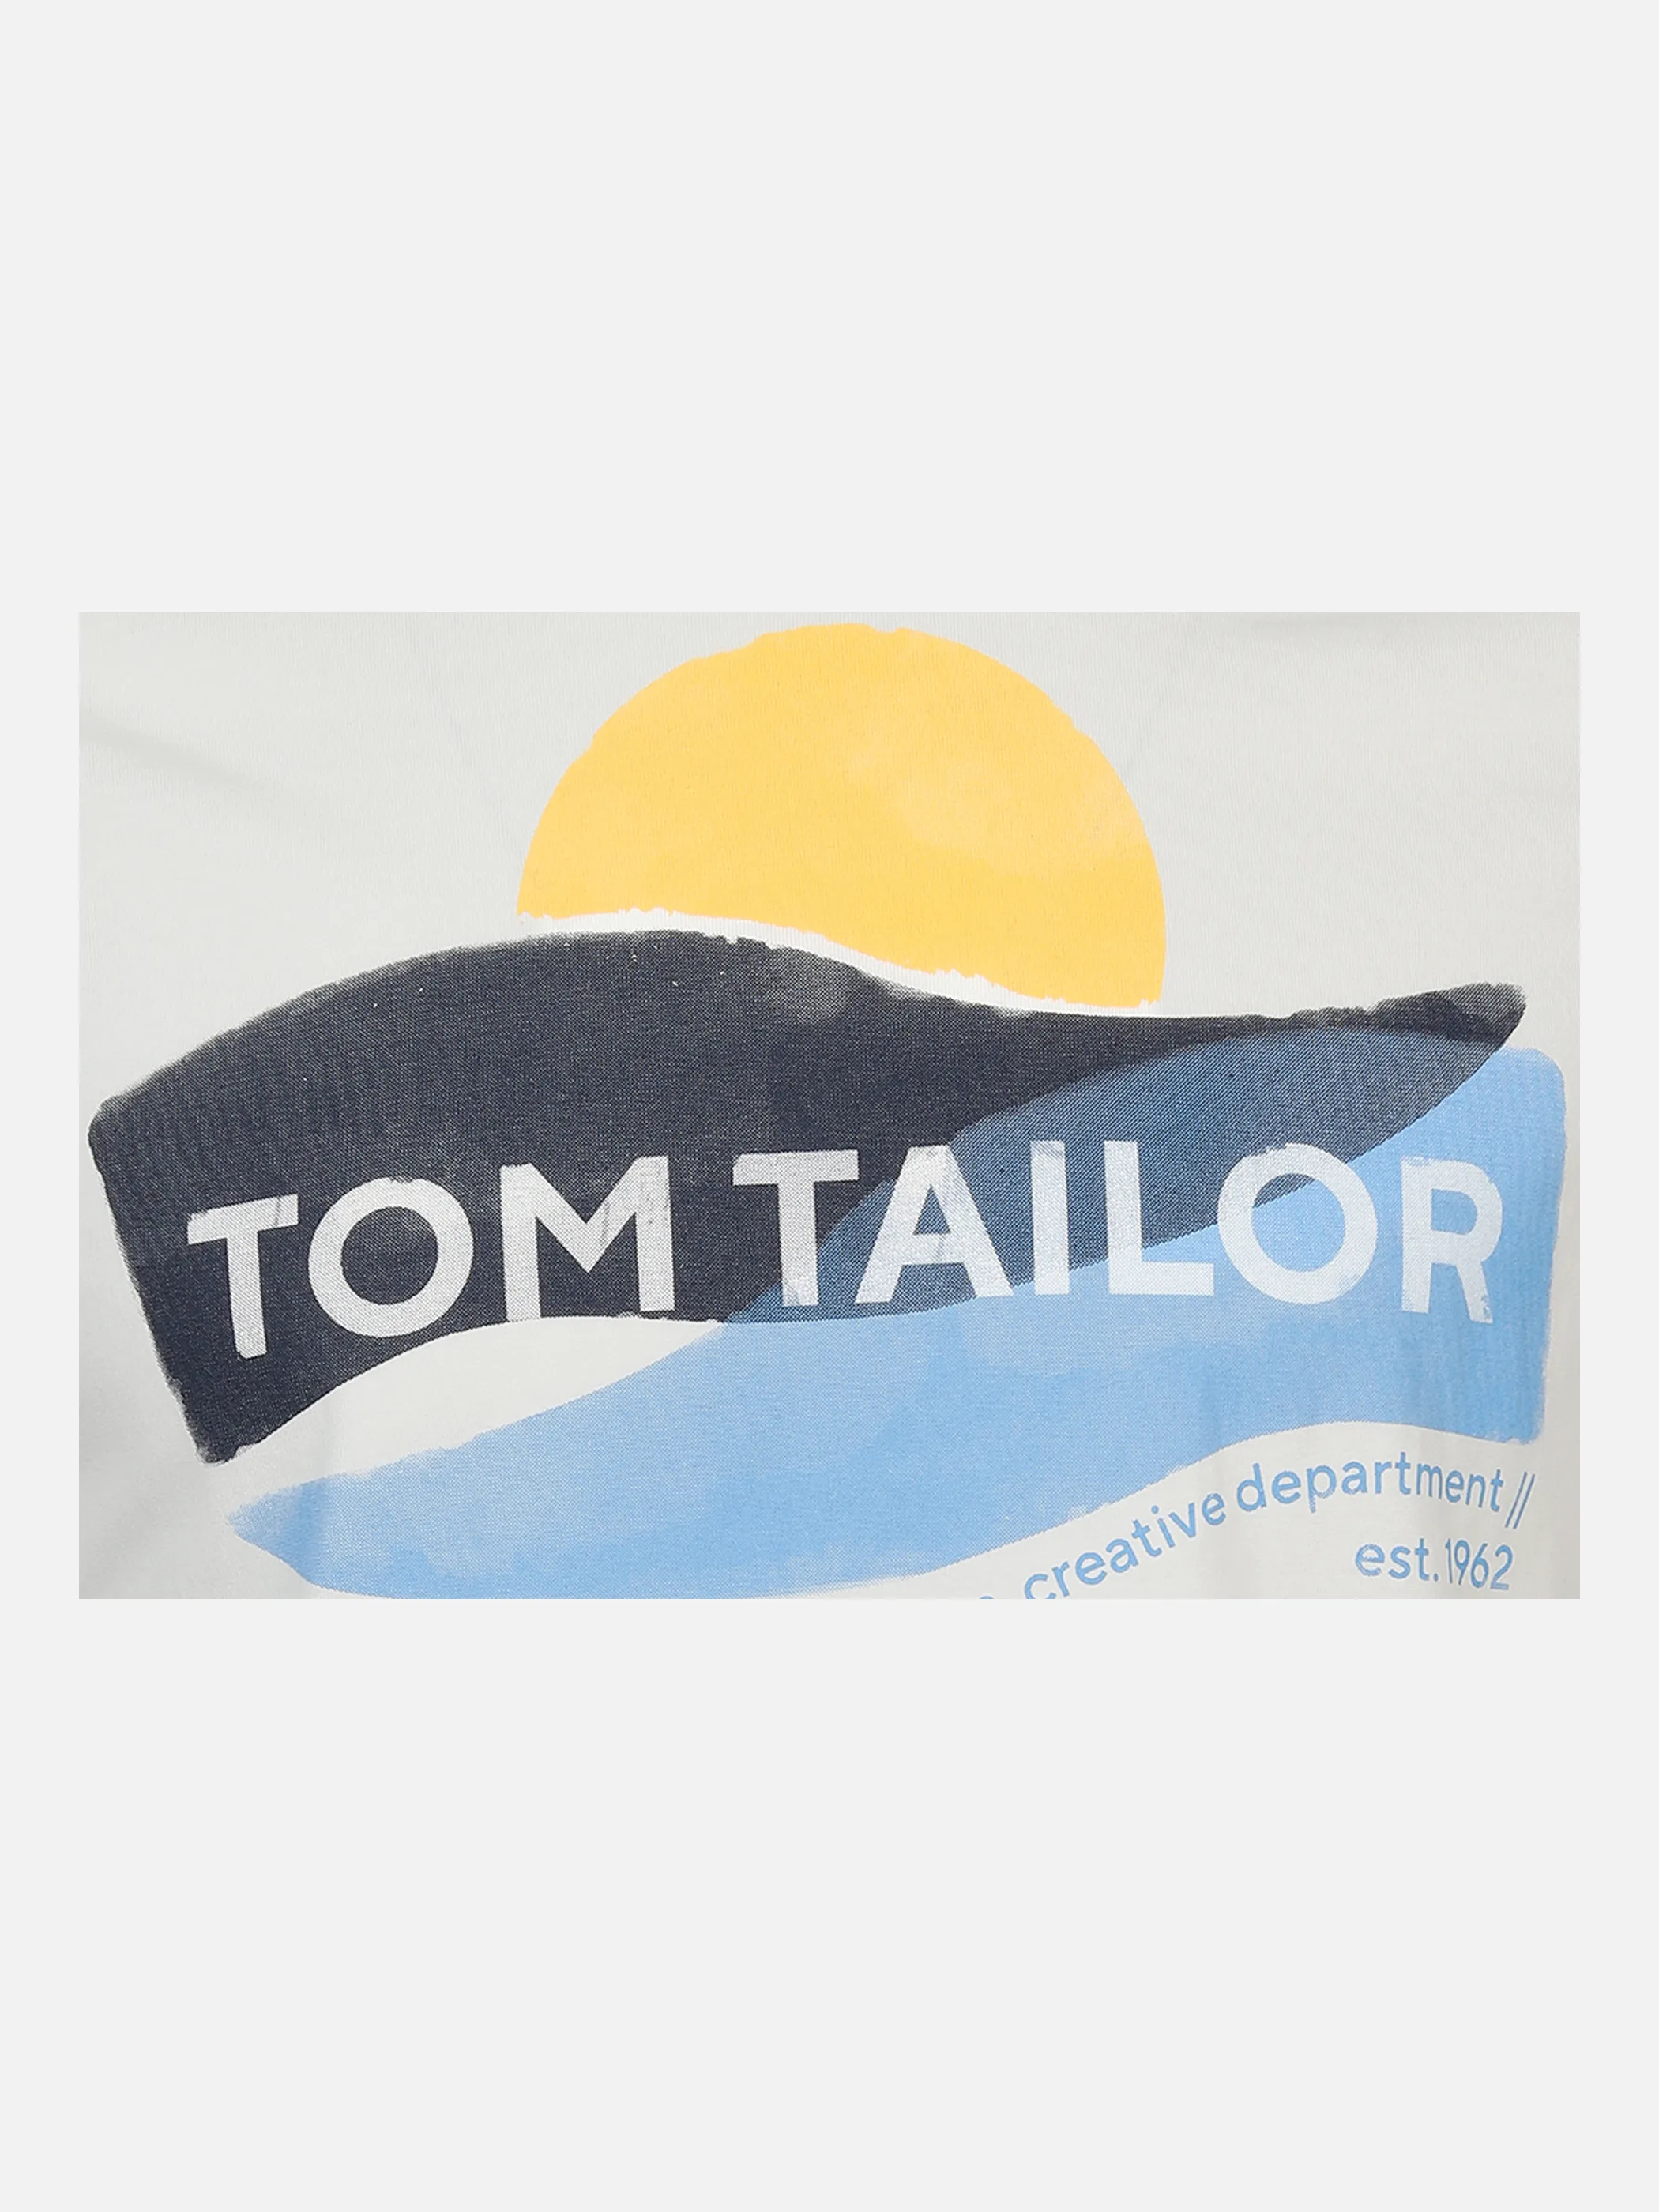 Tom Tailor 1036328 printed t-shirt Weiß 880546 10332 3